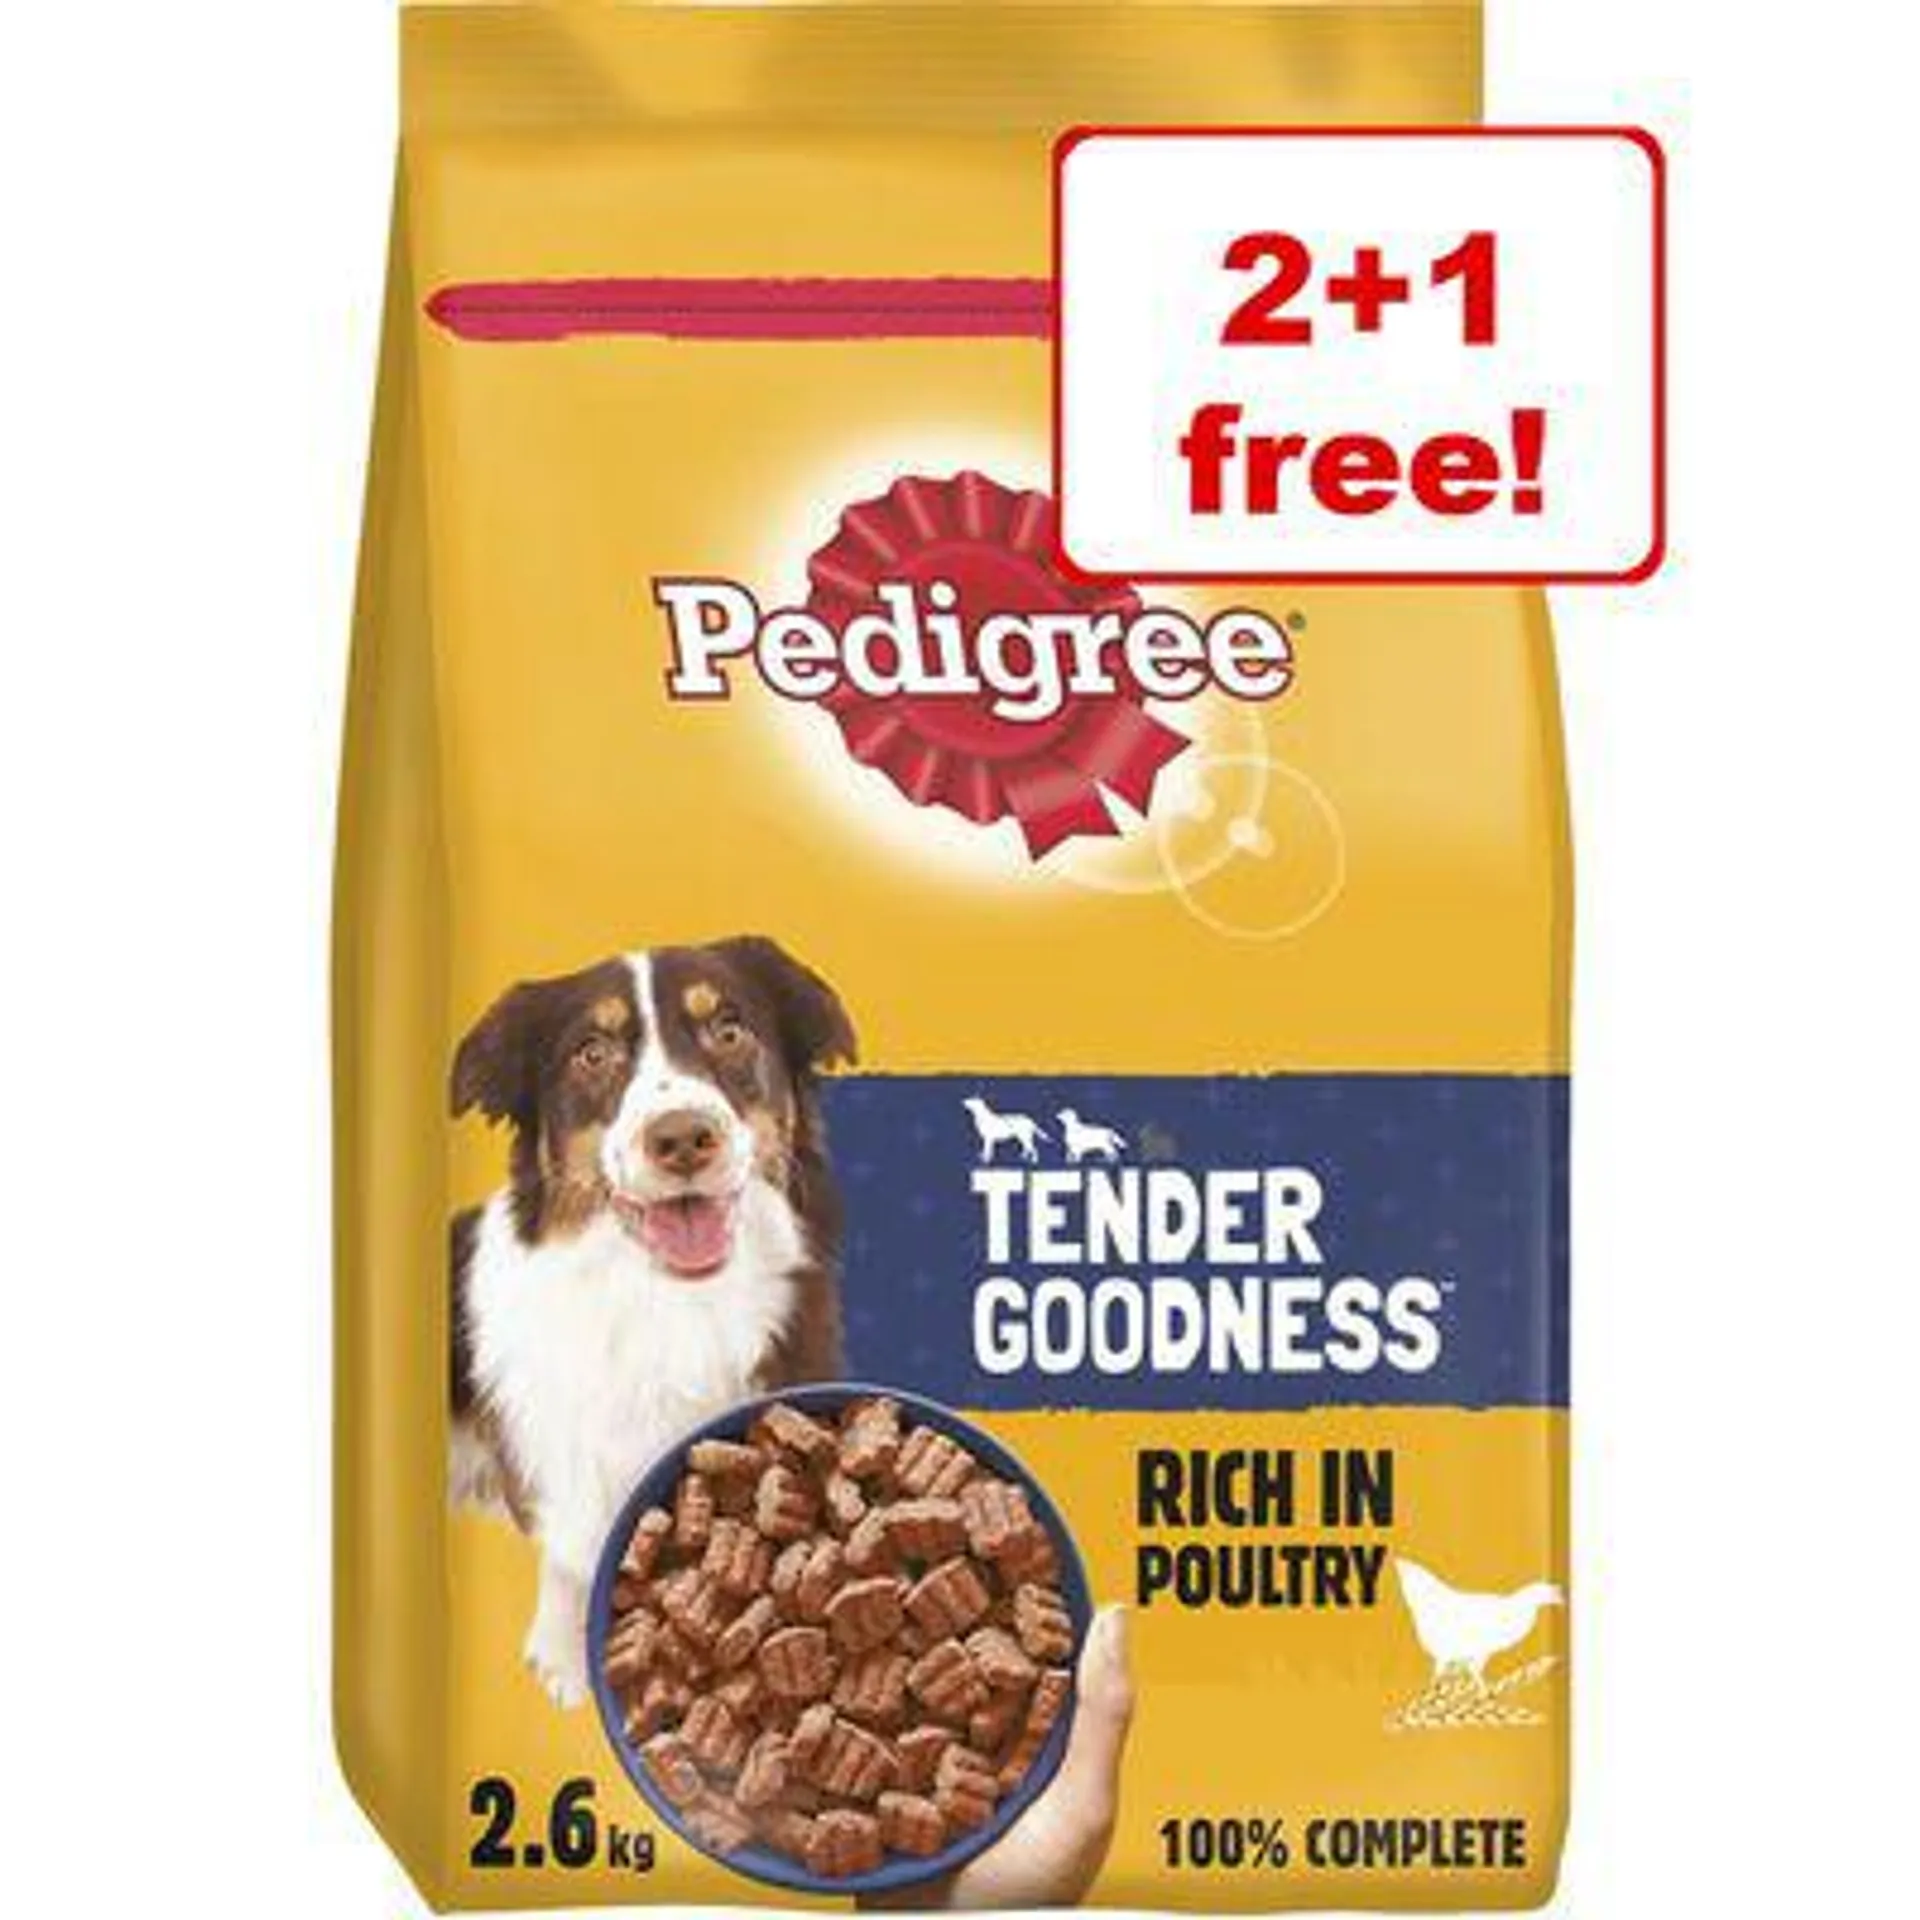 3 x 2.6kg Pedigree Tender Goodness Dry Dog Food - 2 + 1 Free! *